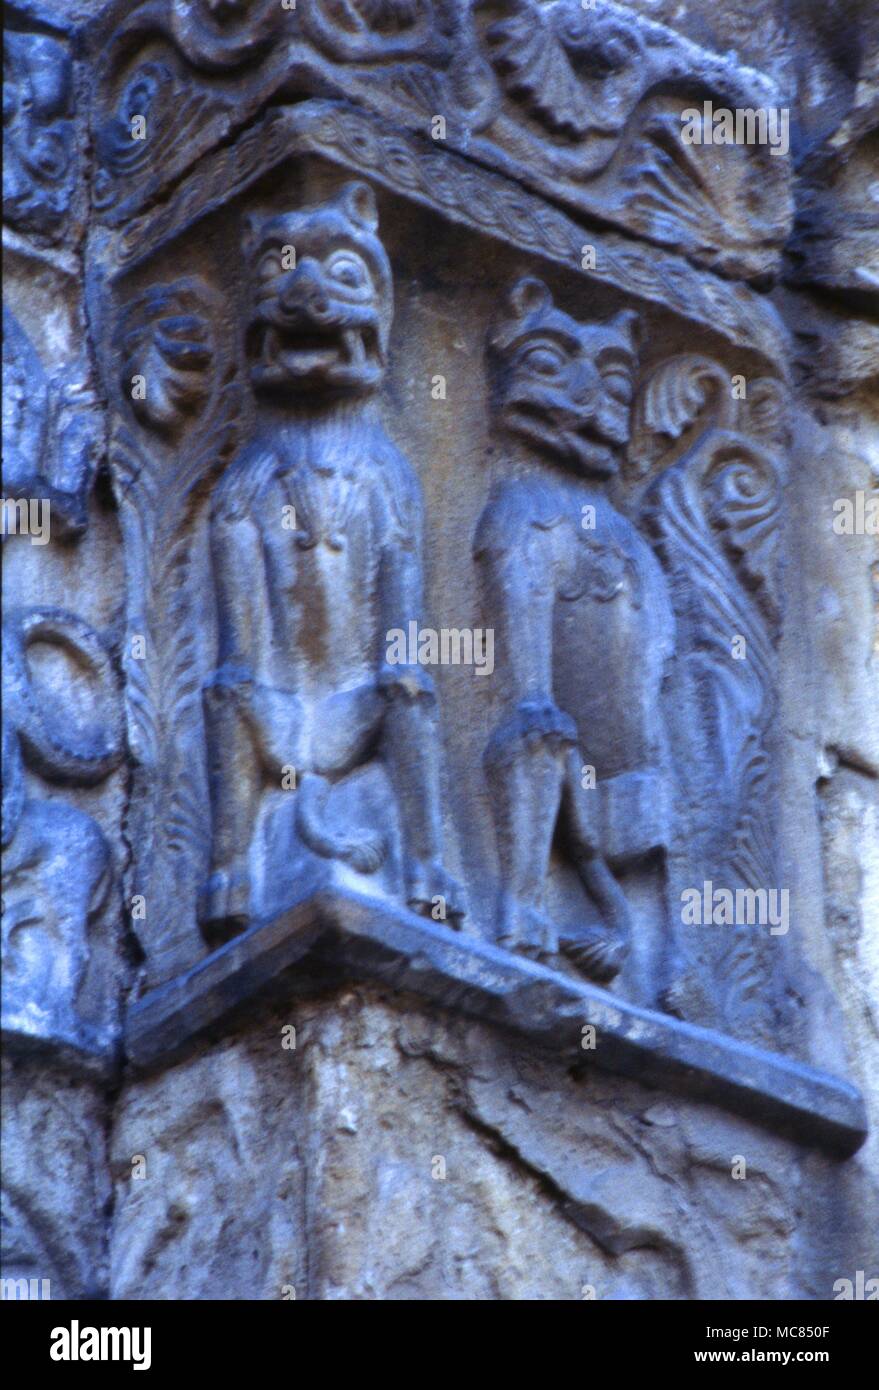 Los felinos como demonios en la fachada de la iglesia de San Michele en Pavia, Italia. Siglo XIV temprano. Foto de stock